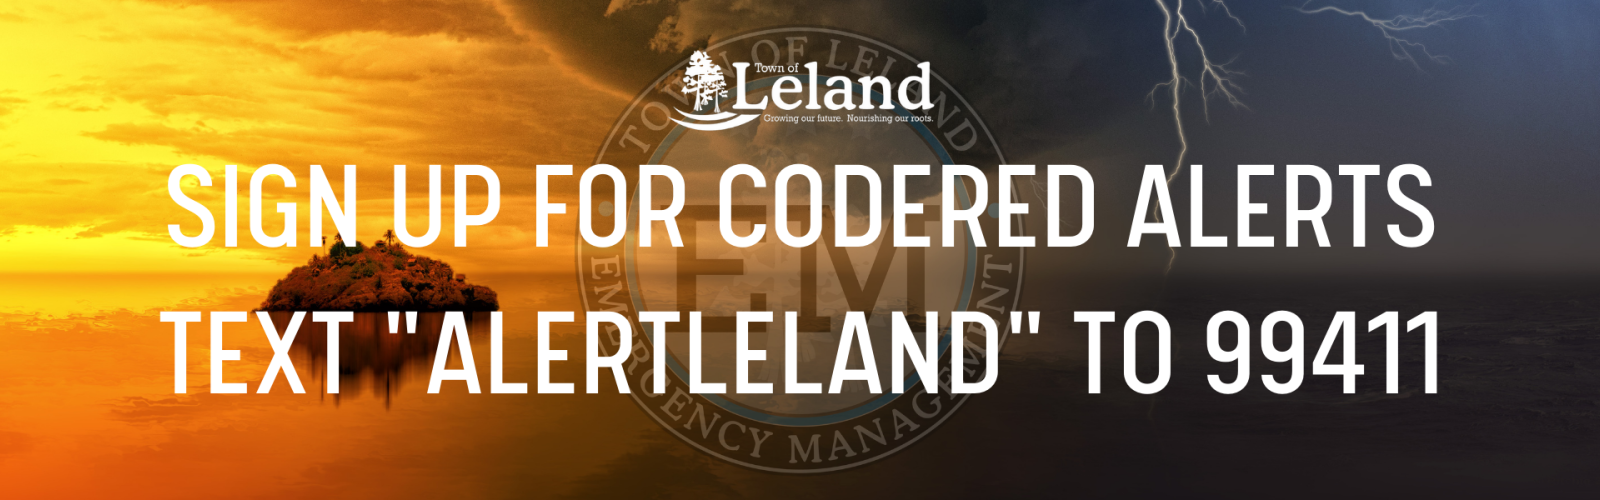 CodeRED Text "ALERTLELAND" to 99411